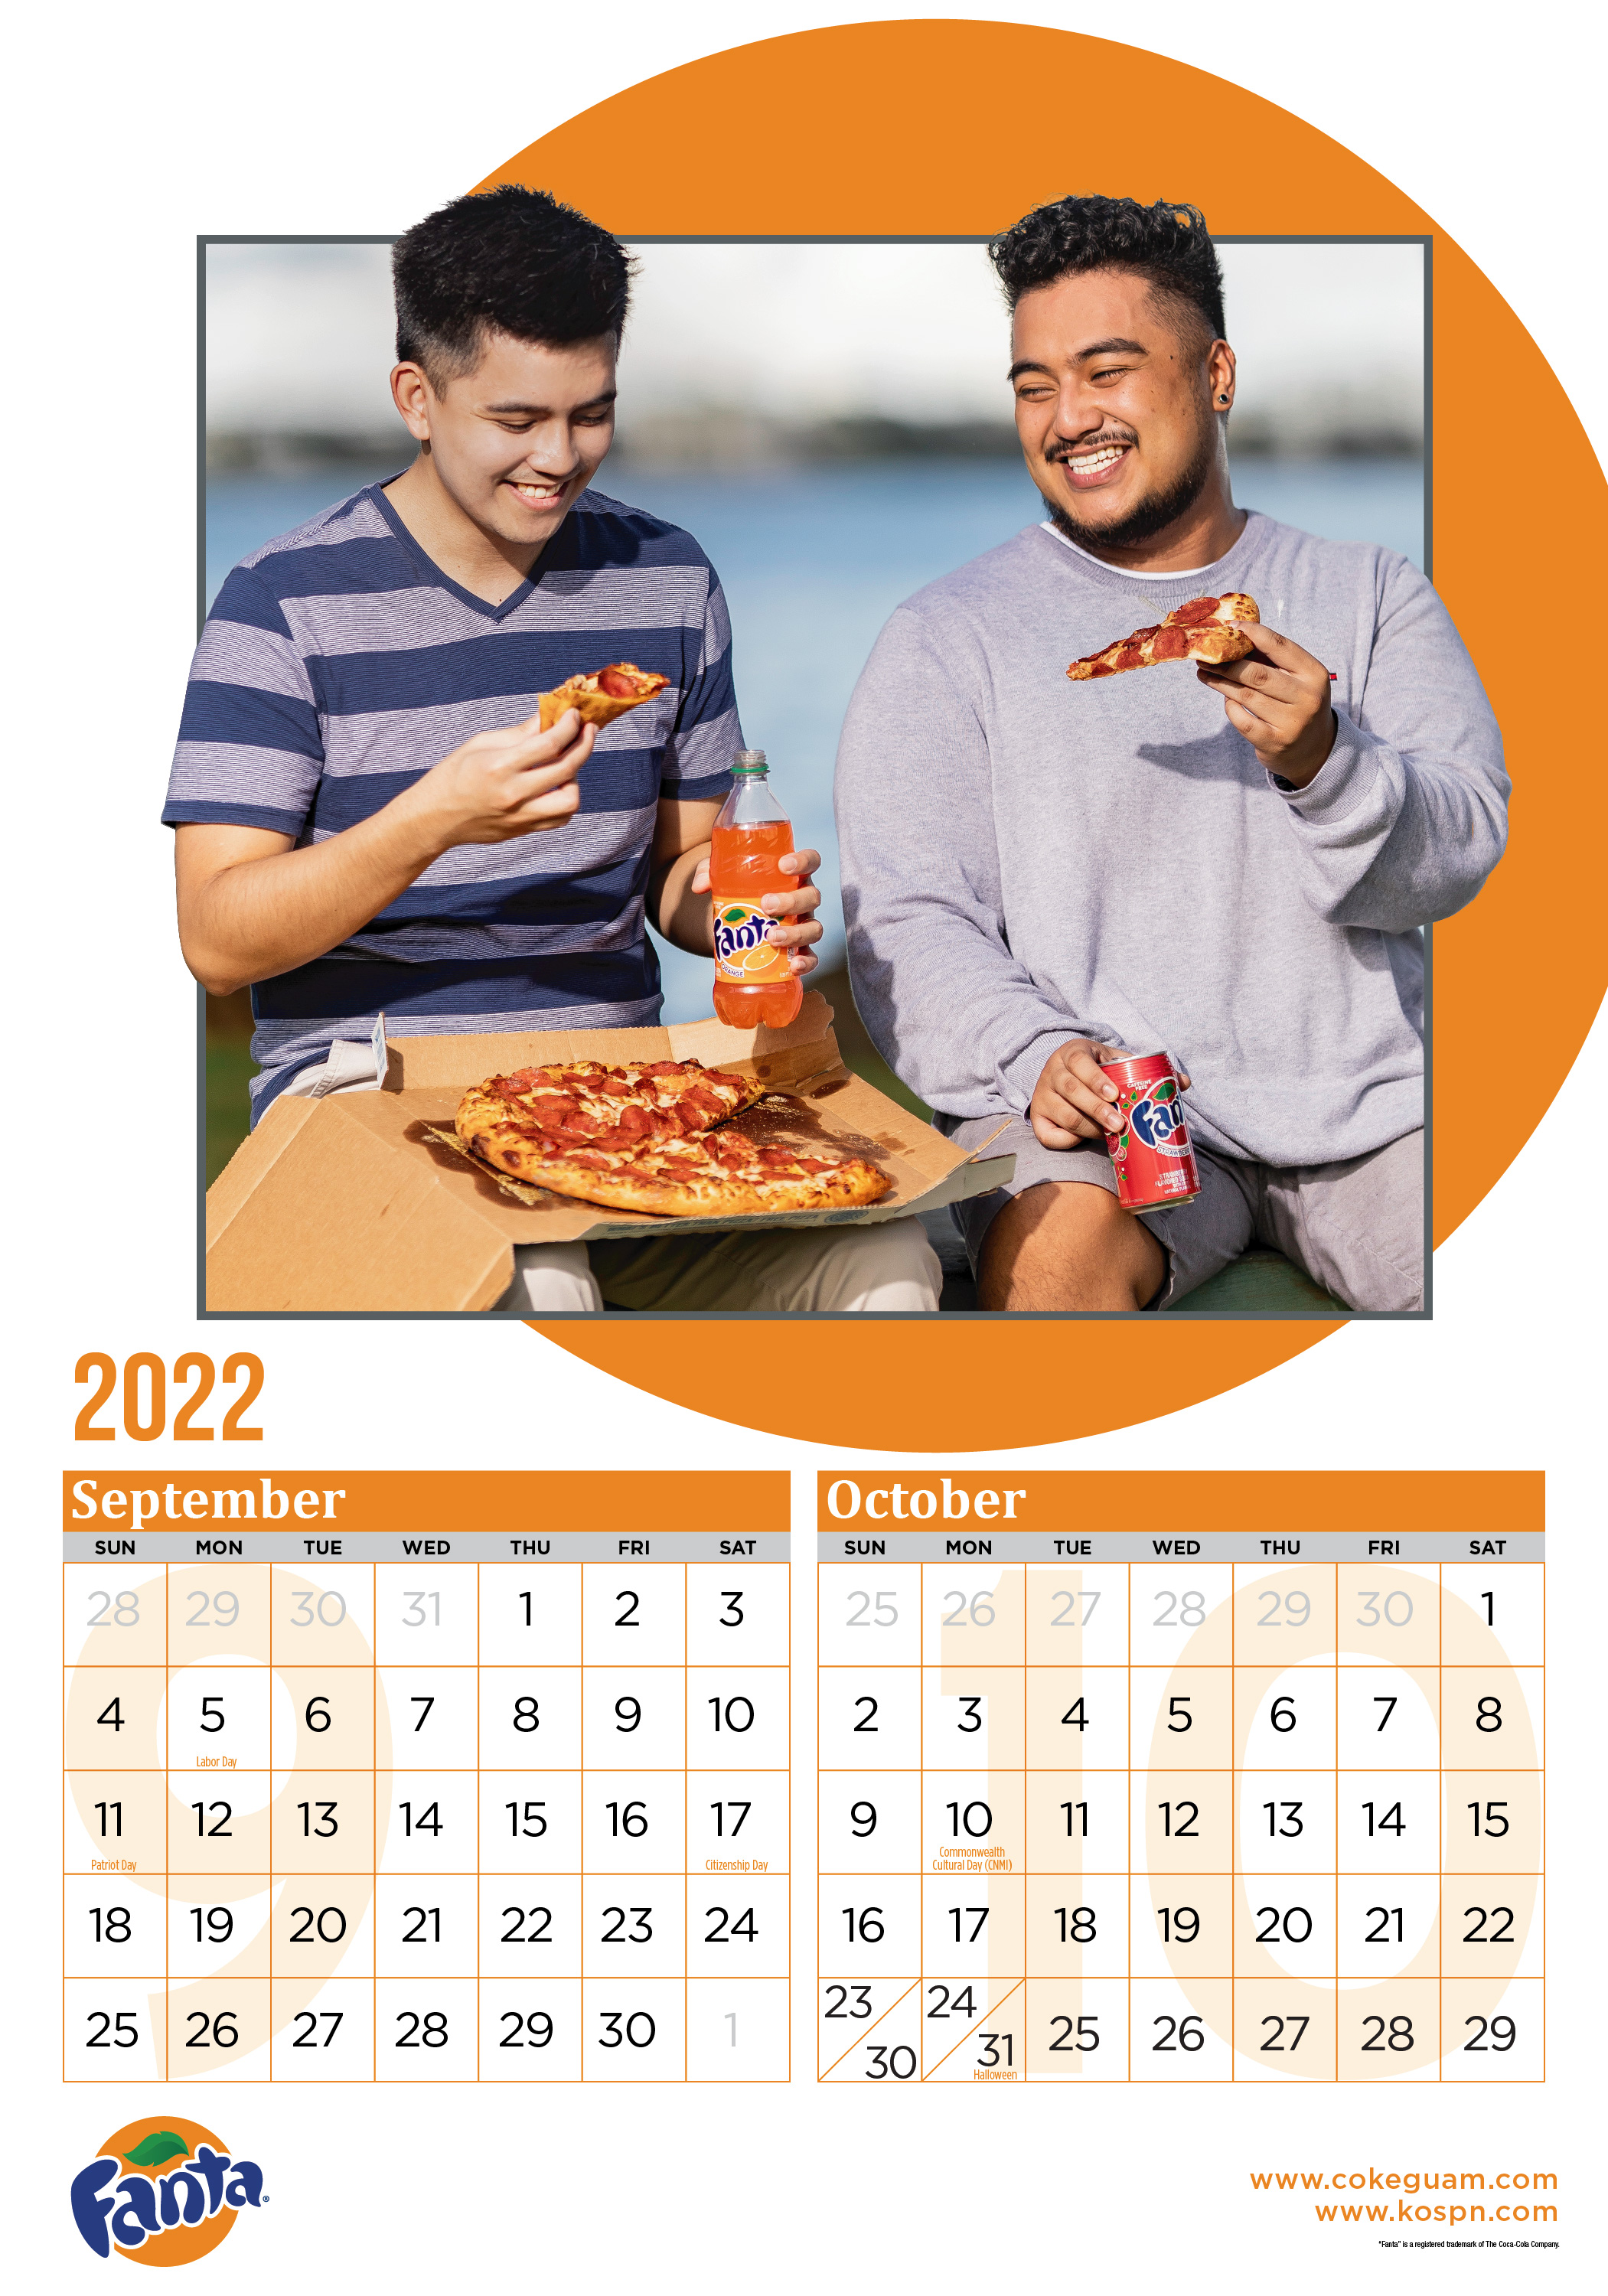 2022 Coca-Cola Calendar  September-October